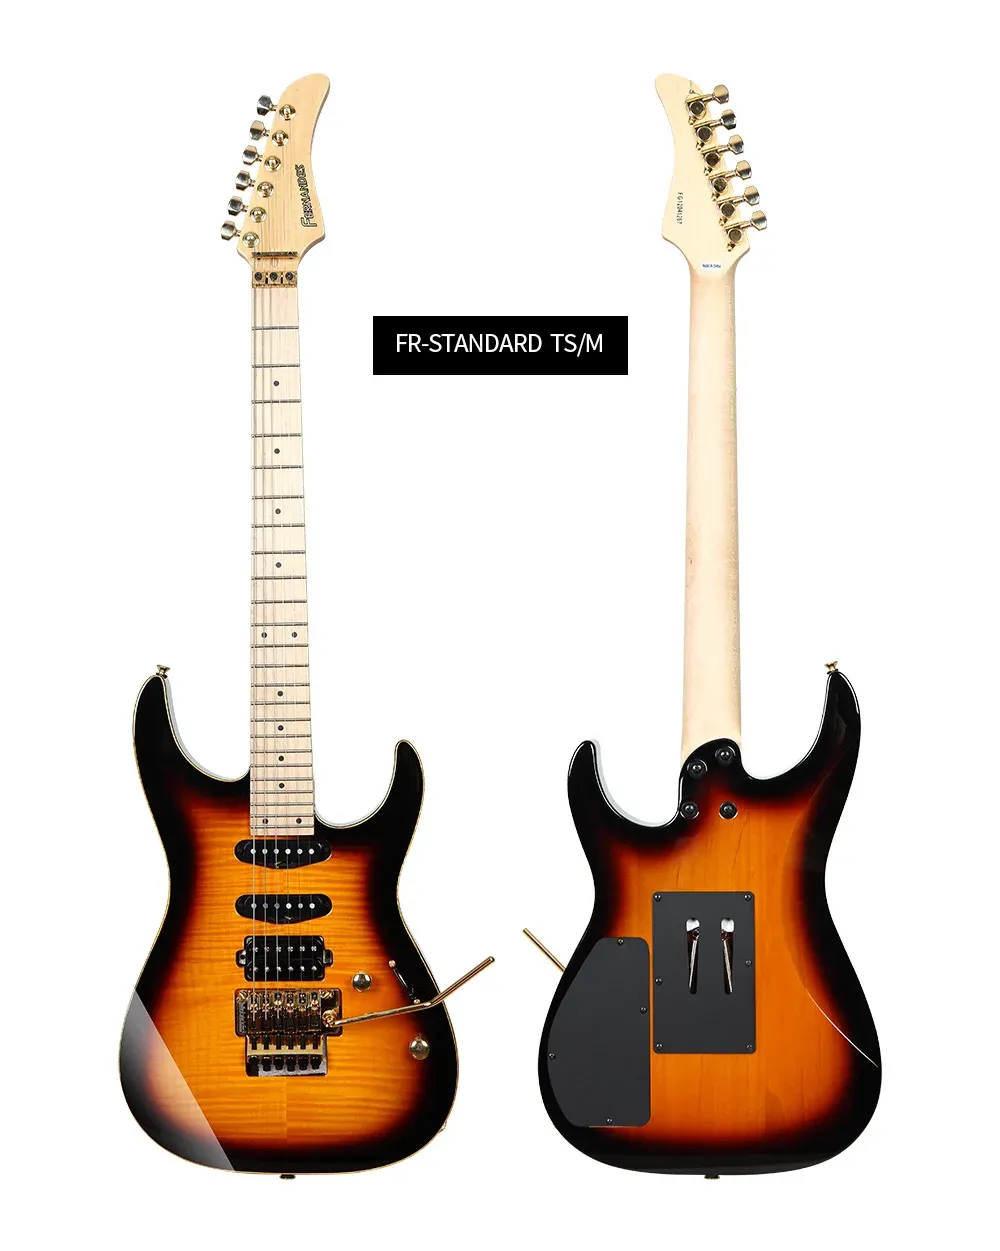 Guitarra original Fernandes FR11 Rocker Double Rocker Ecret Guitar pronta na loja Free Shipping imediatamente